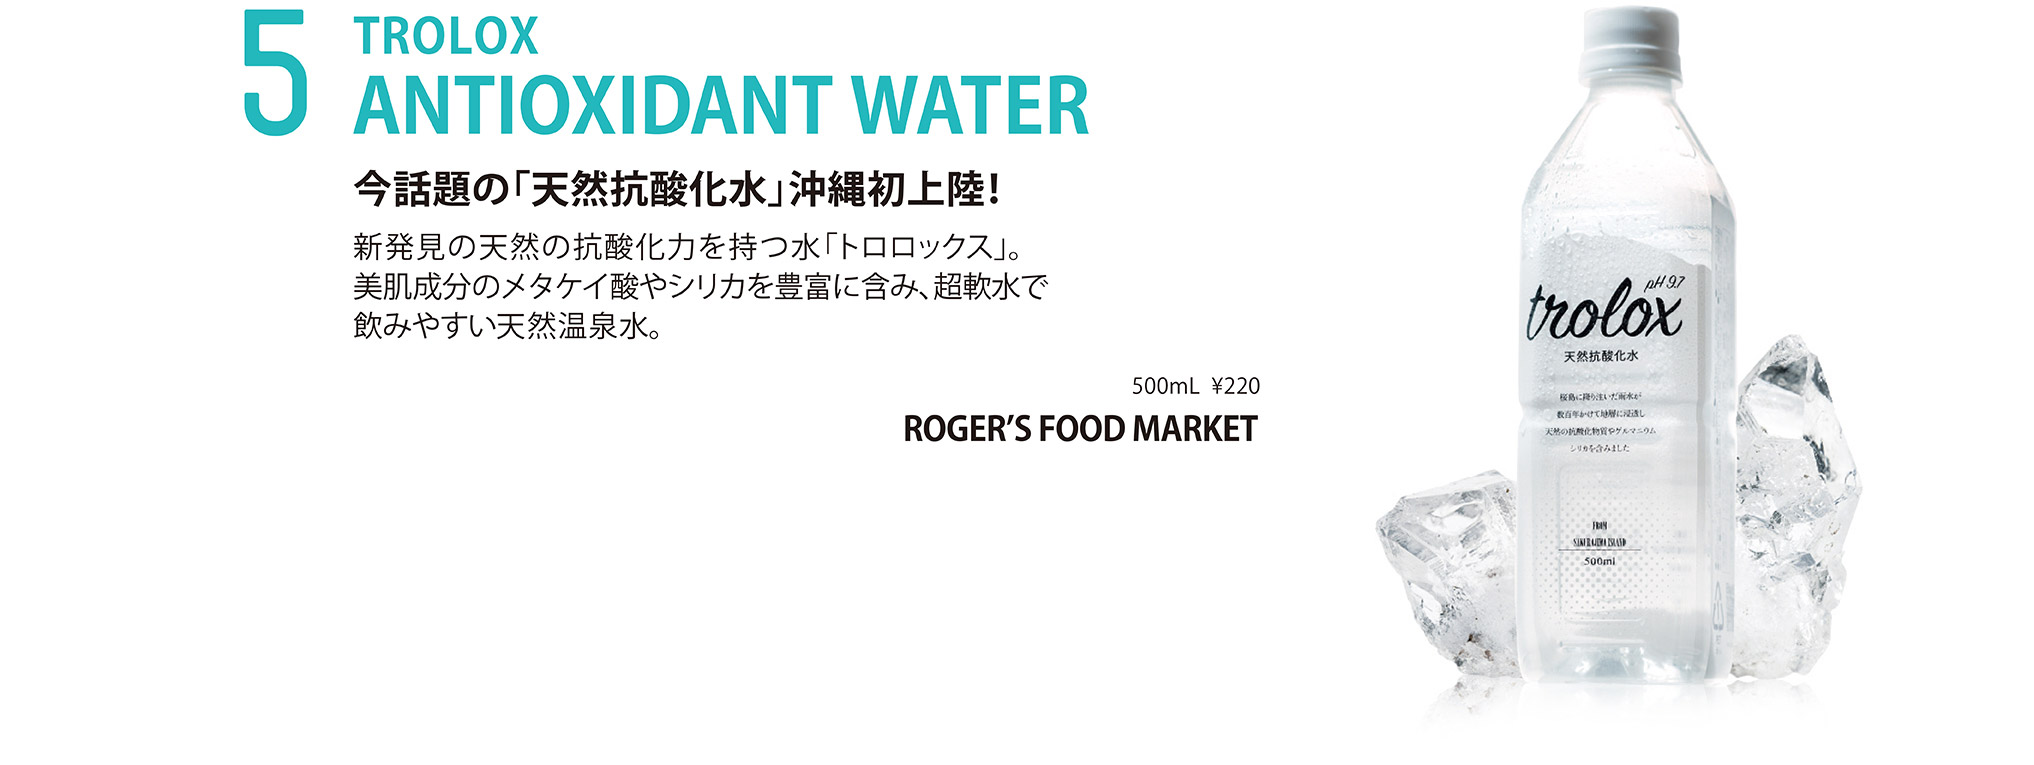 TROLOX ANTIOXIDANT WATER 今話題の「天然抗酸化水」が沖縄初上陸!